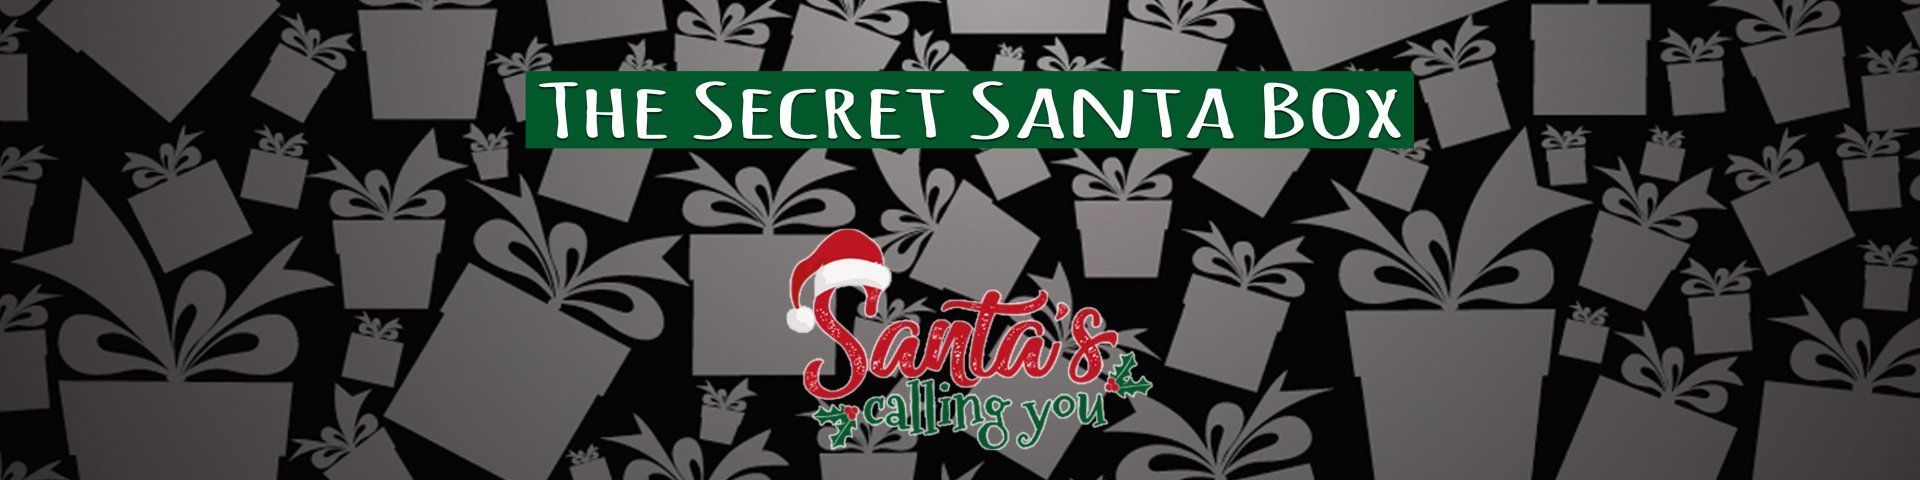 Santa's Calling You - The Secret Santa Box